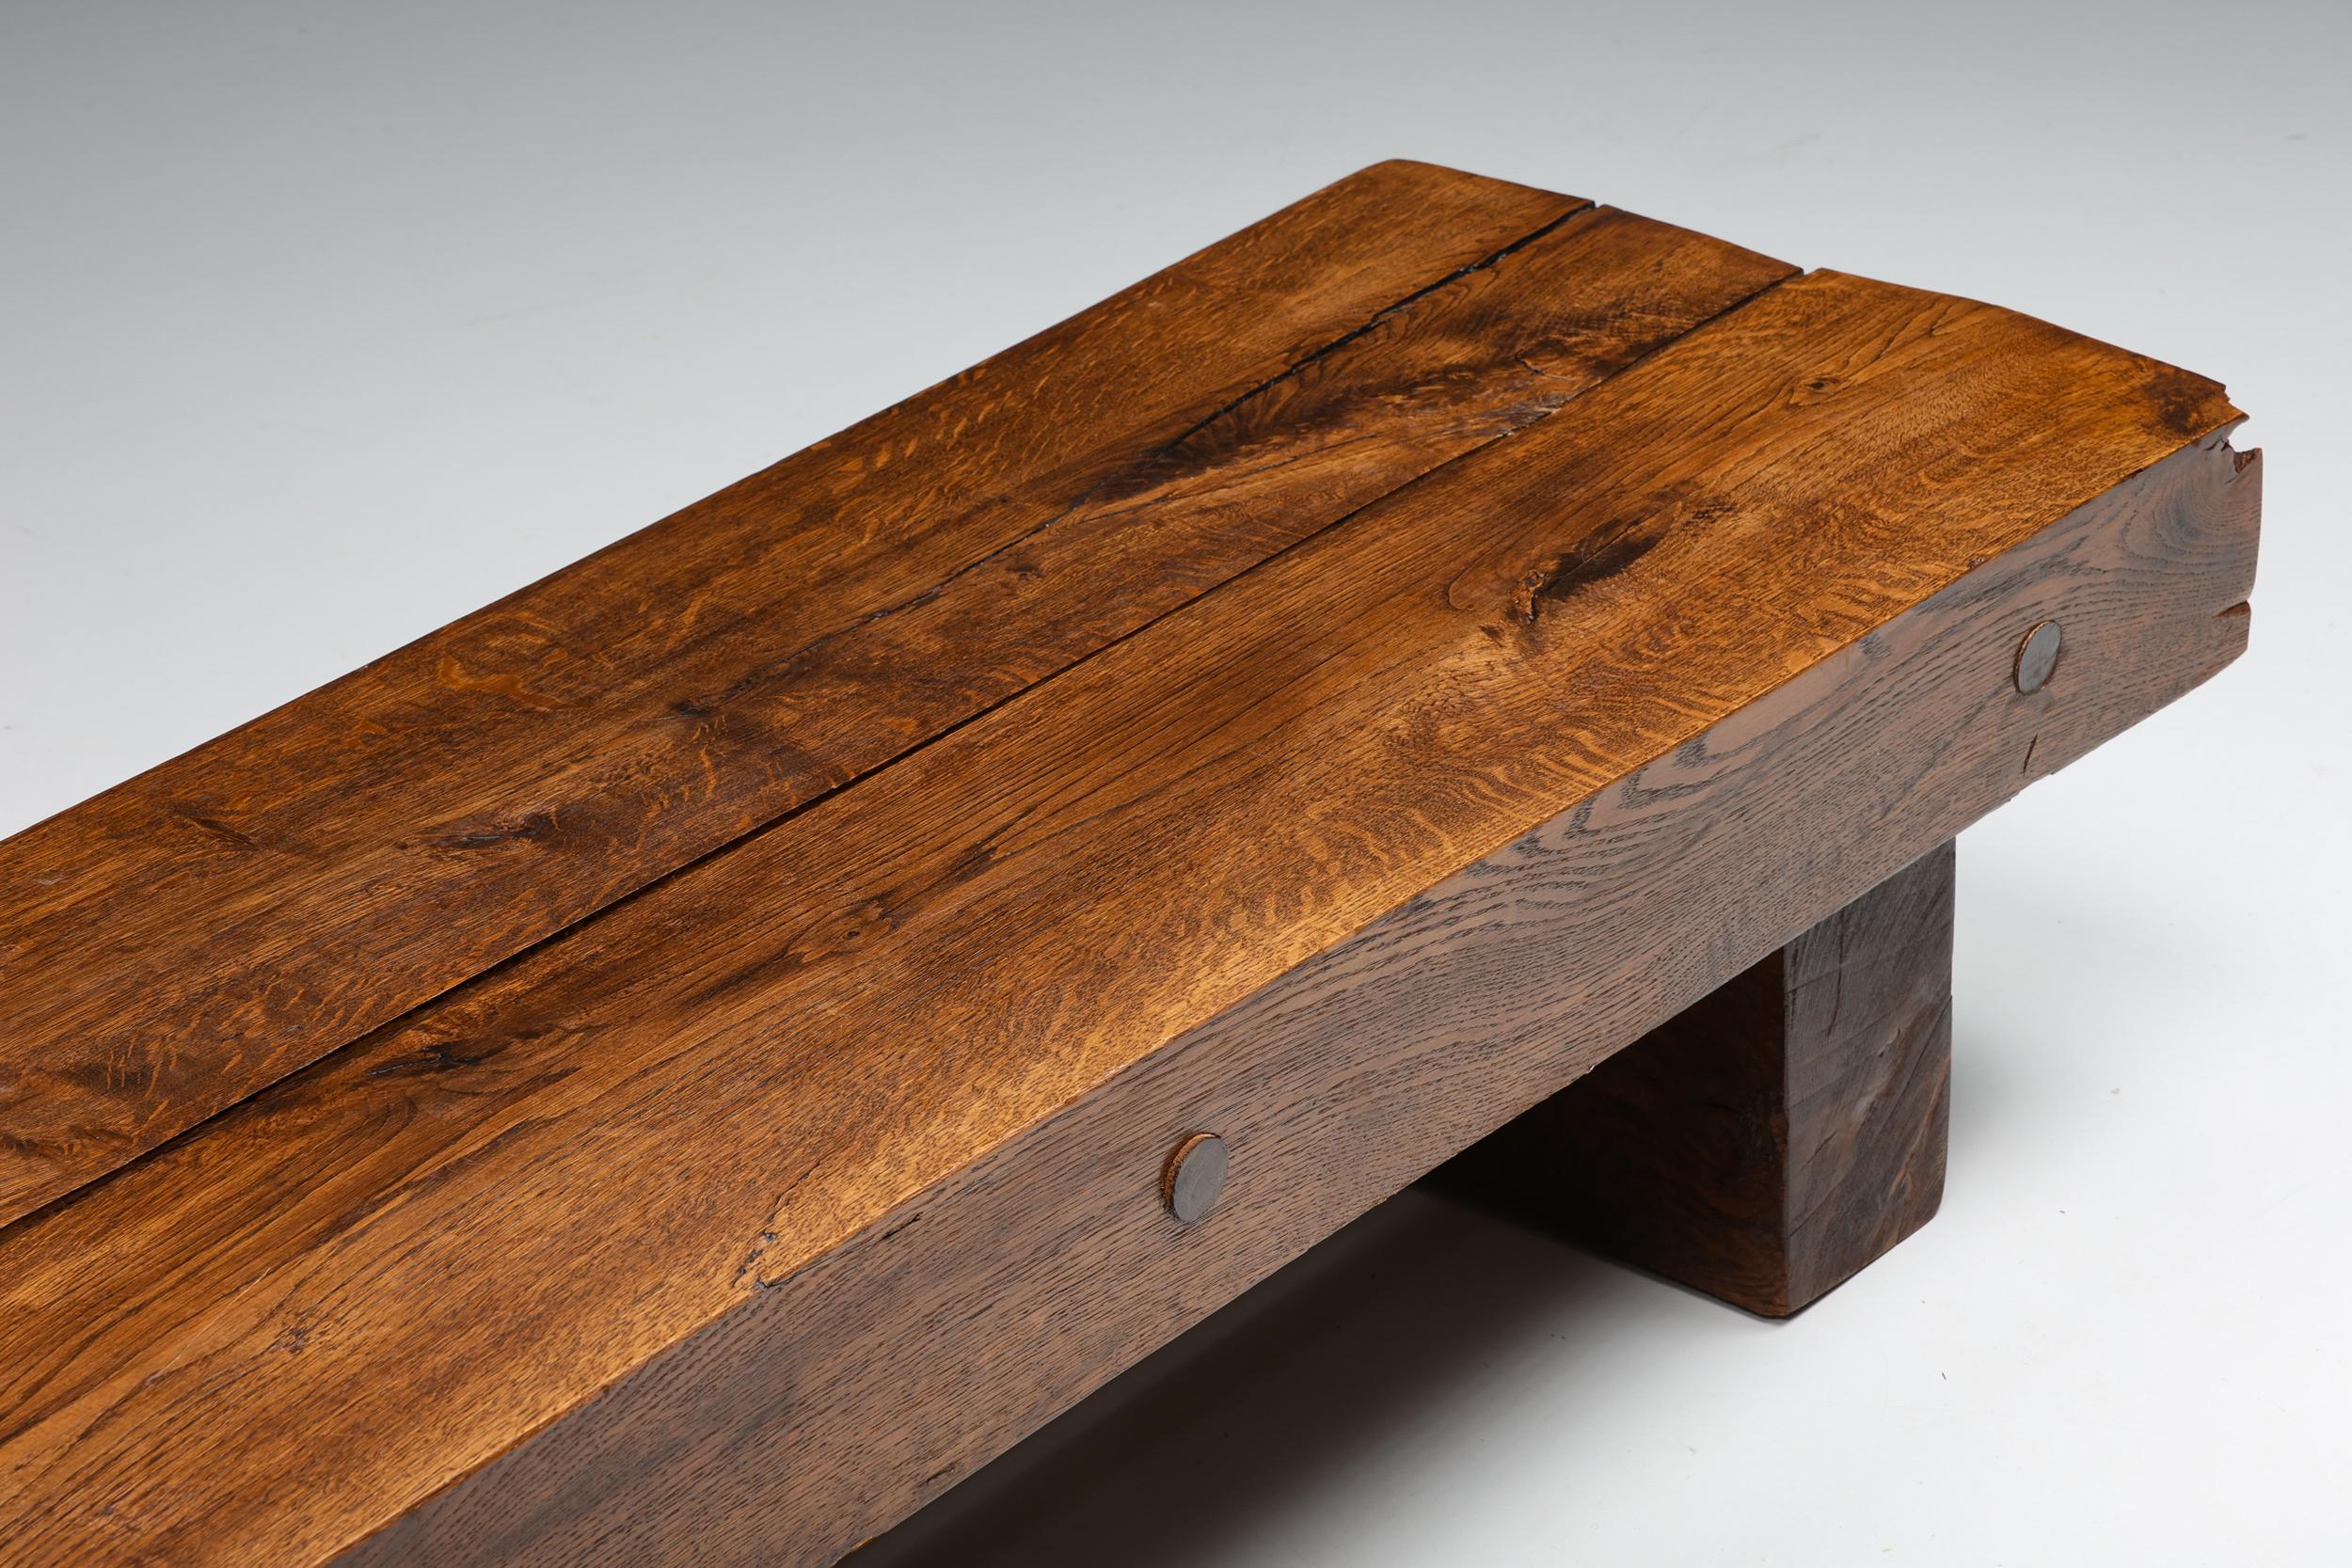 Wood Wabi-Sabi Two-Legged Rectangular Coffee Table, Mid-Century Modern, 1940's